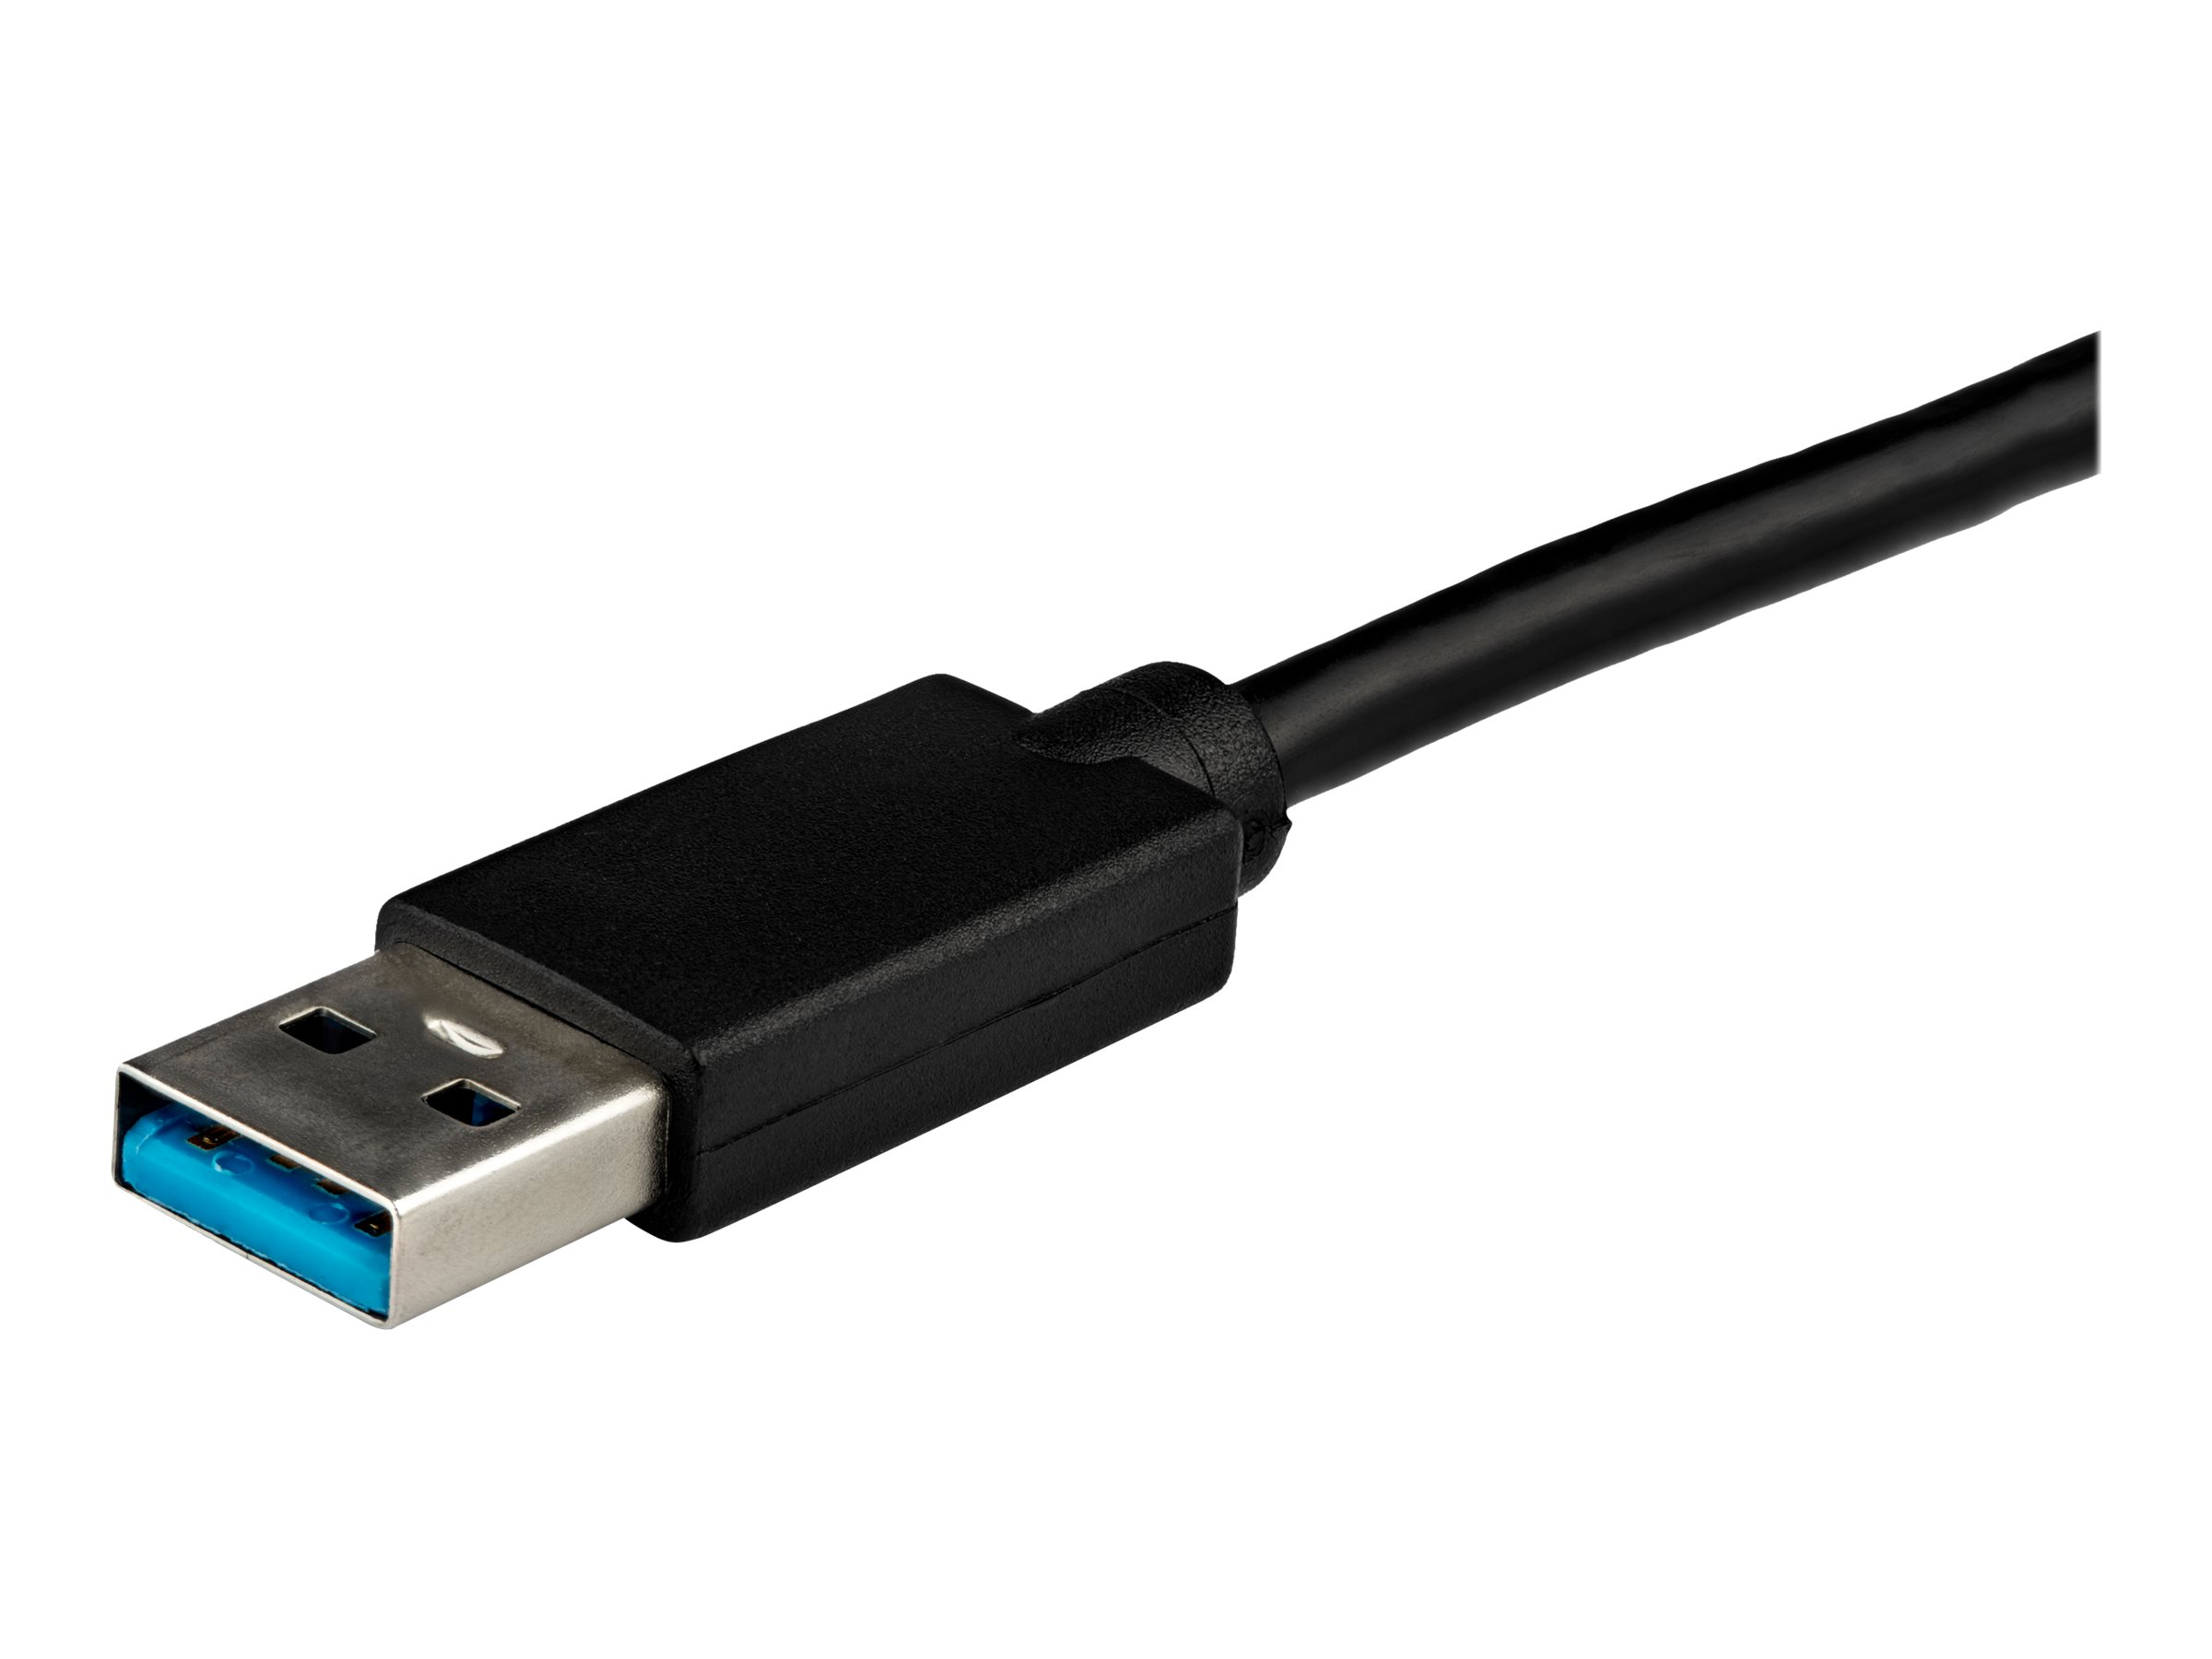 StarTech.com USB zu HDMI Adapter - Externe Grafikkarte - USB 3.0 - Slim - 1080p - Multi Monitor Adapter - Video- / Audiokabel - TAA-konform - 19 cm